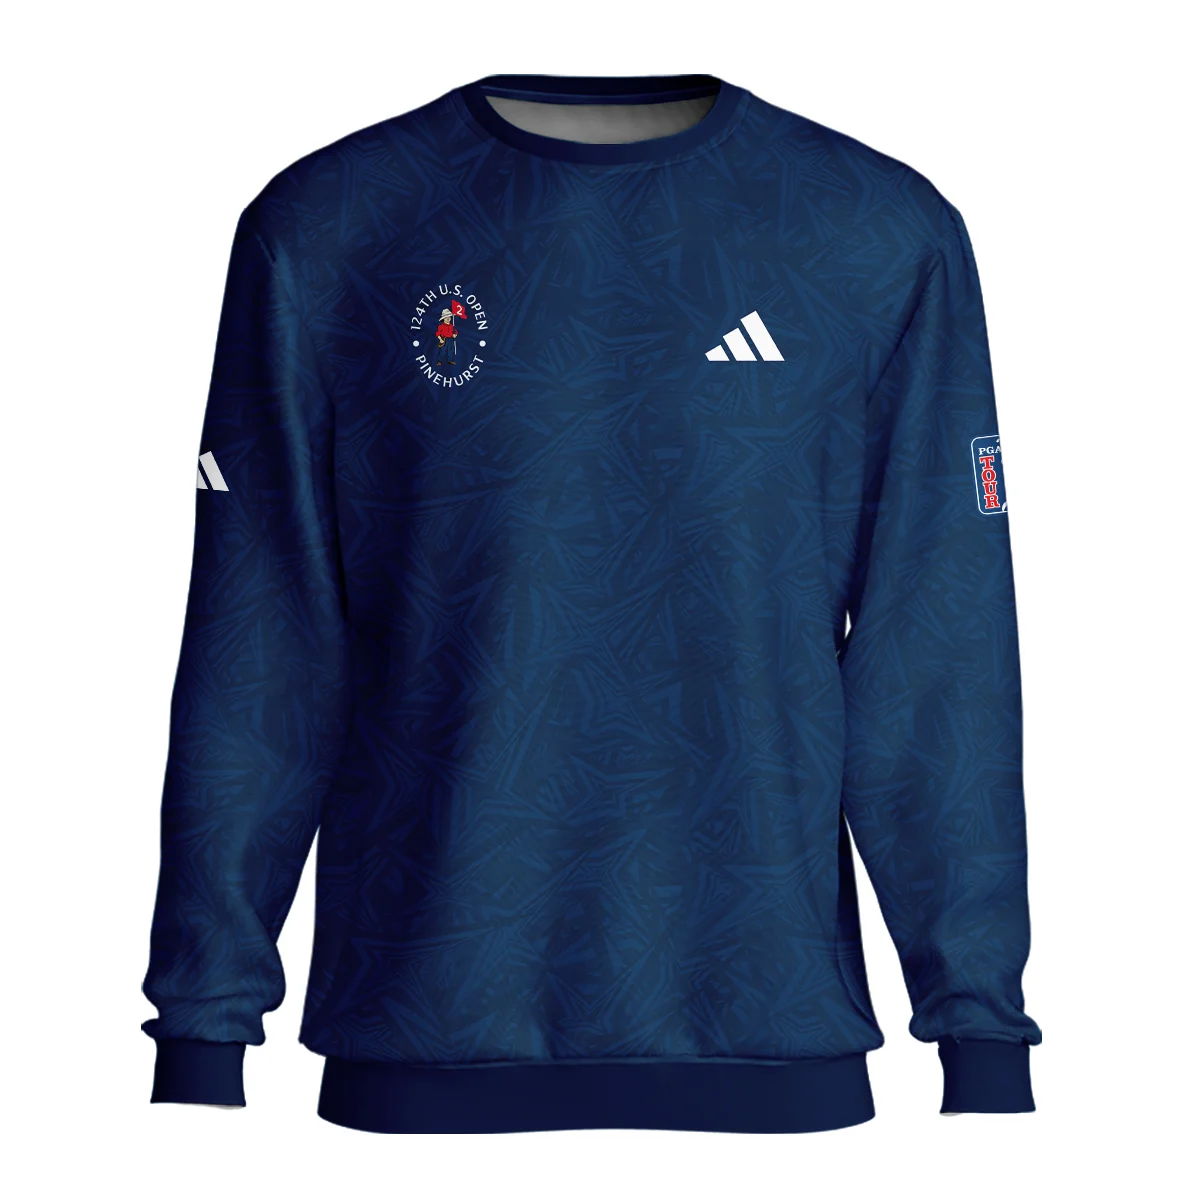 Adidas 124th U.S. Open Pinehurst Stars Gradient Pattern Dark Blue Unisex Sweatshirt Style Classic Sweatshirt